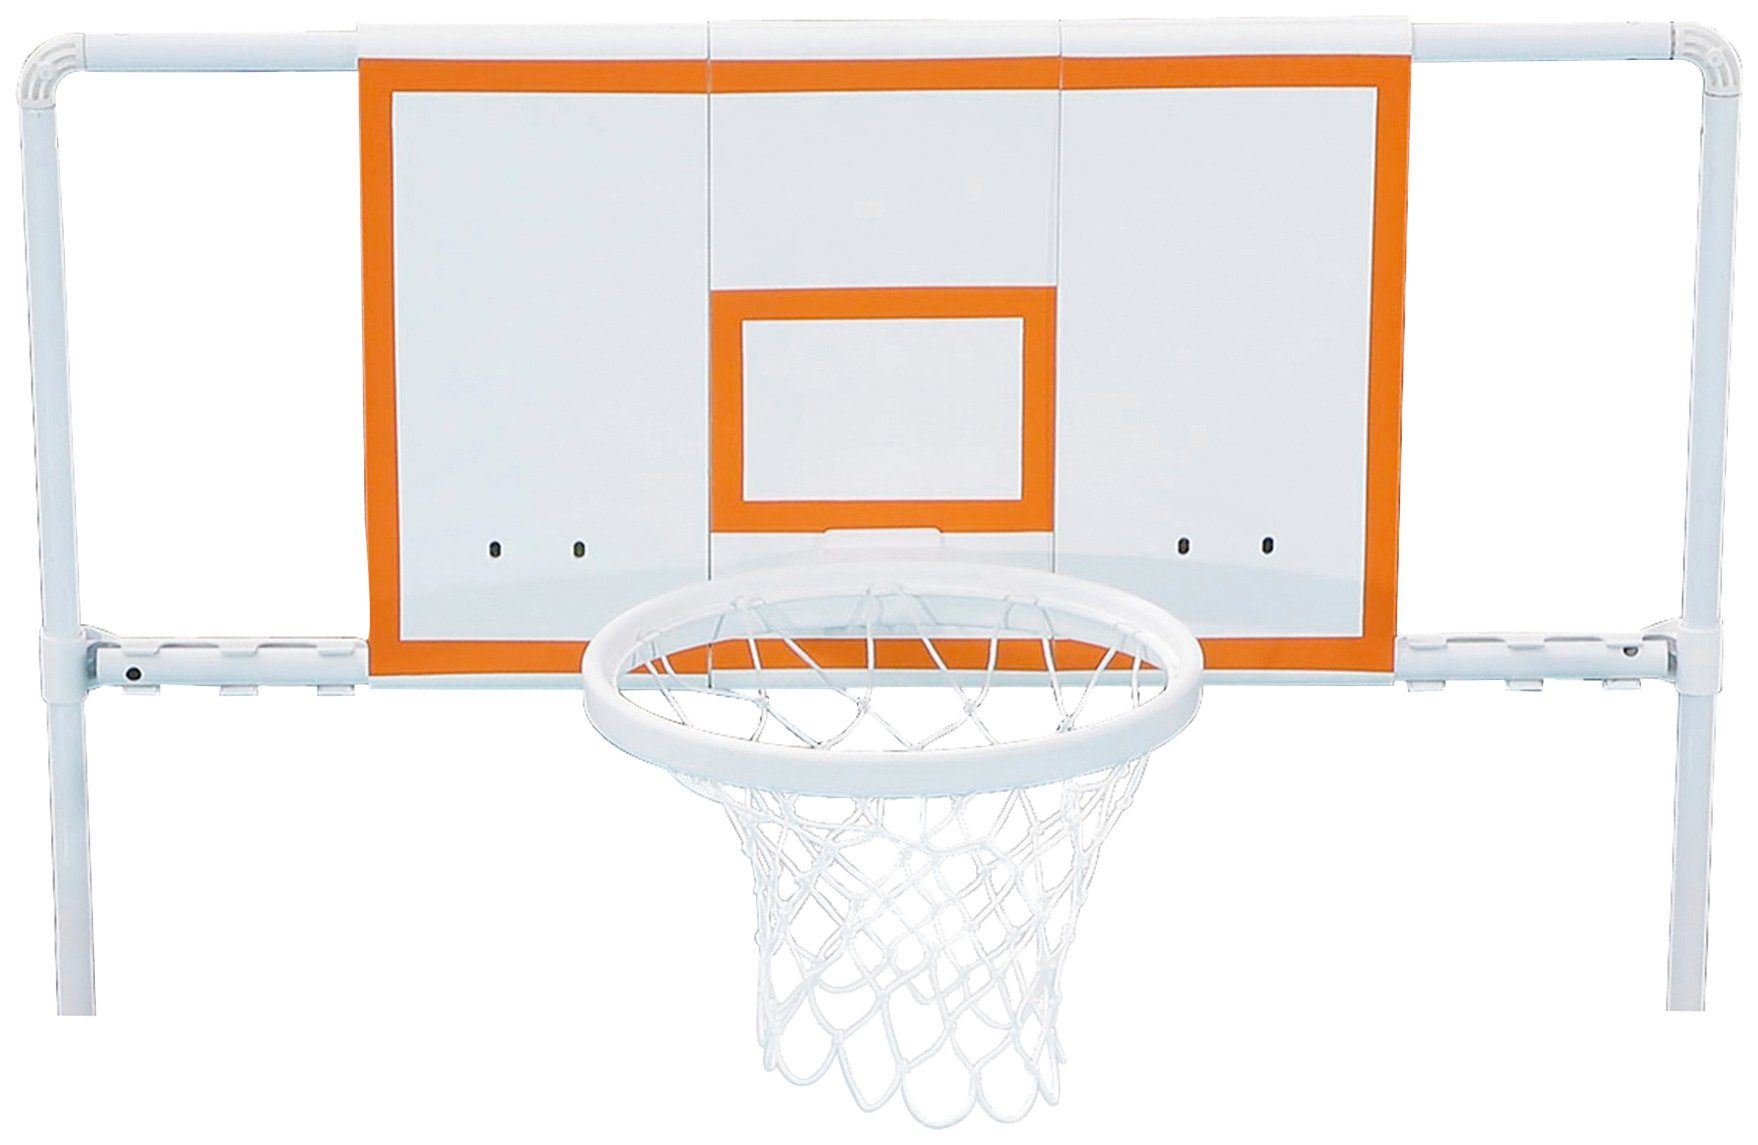 SummerWaves Basketballkorb (Set), inkl. 500-610 Pools Ball, cm für